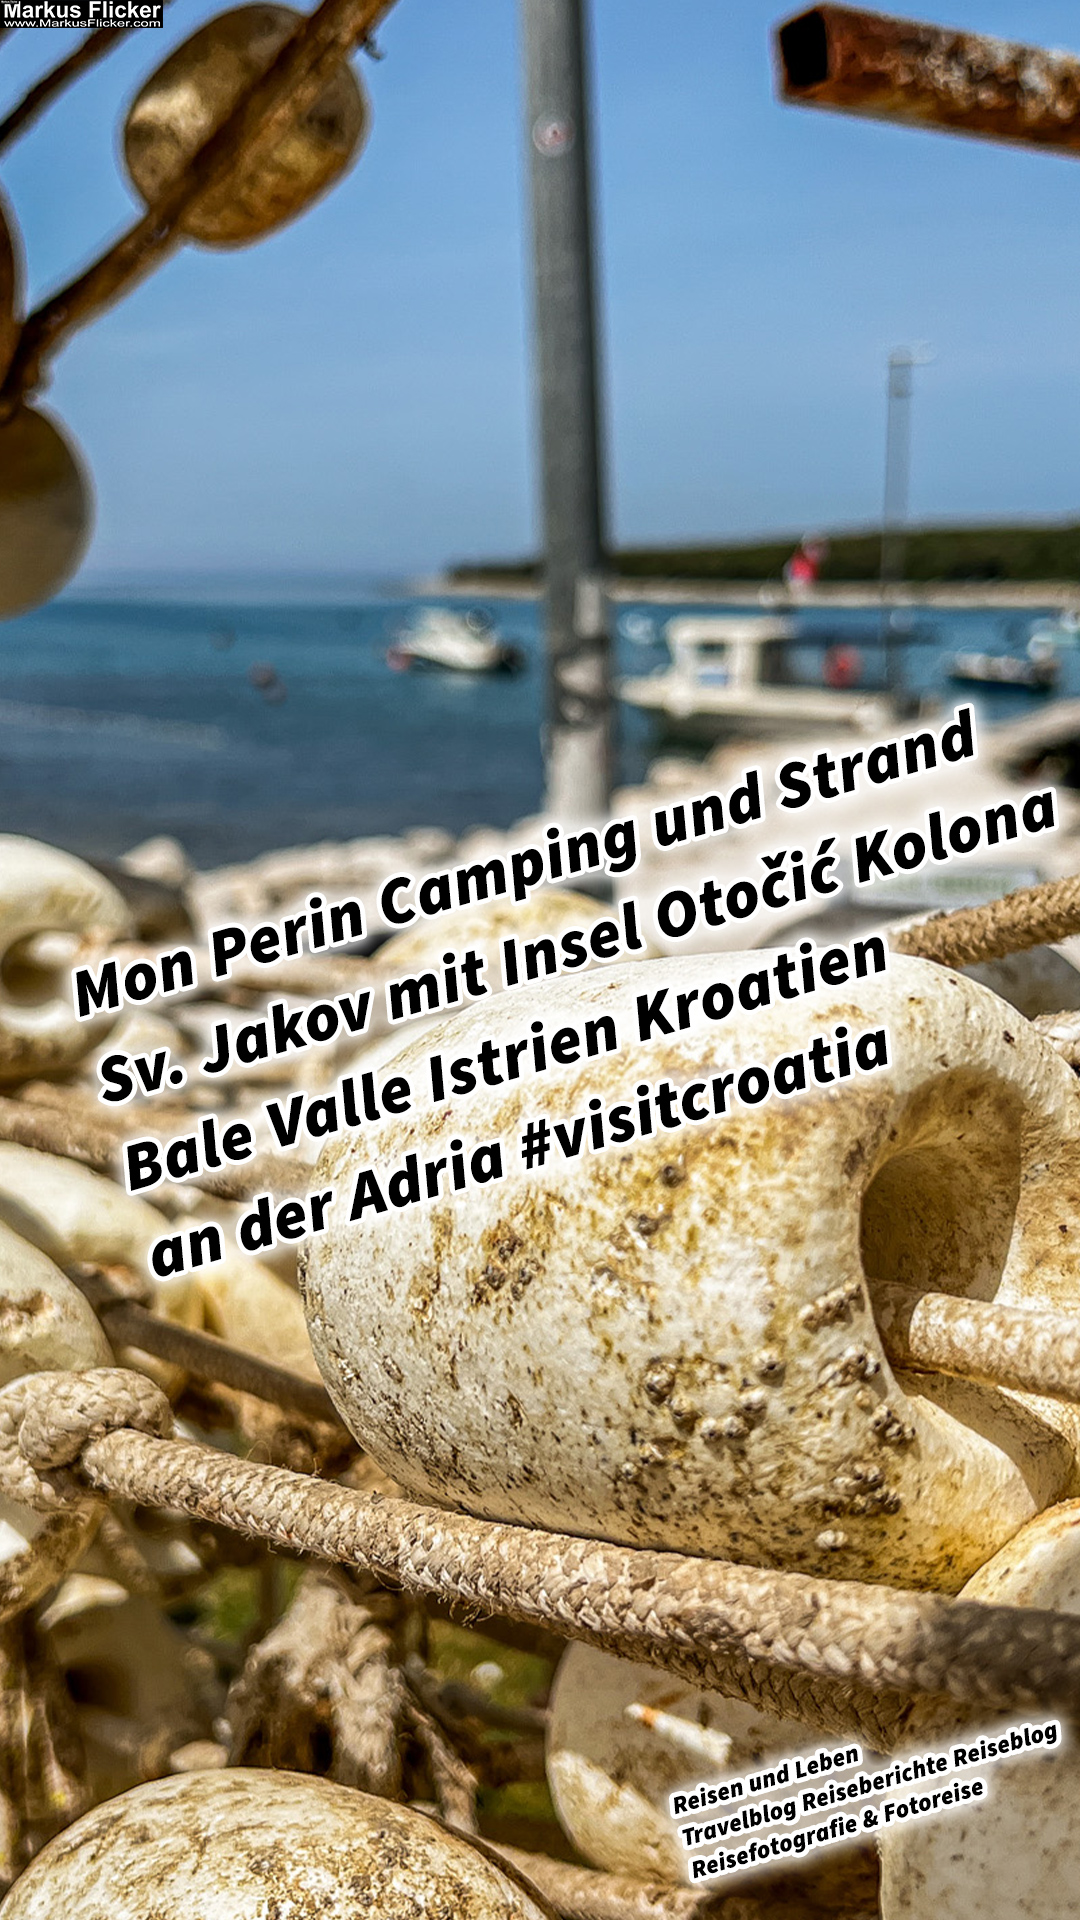 Mon Perin Camping und Strand Sv. Jakov mit Insel Otočić Kolona Bale Valle Istrien Kroatien an der Adria #visitcroatia